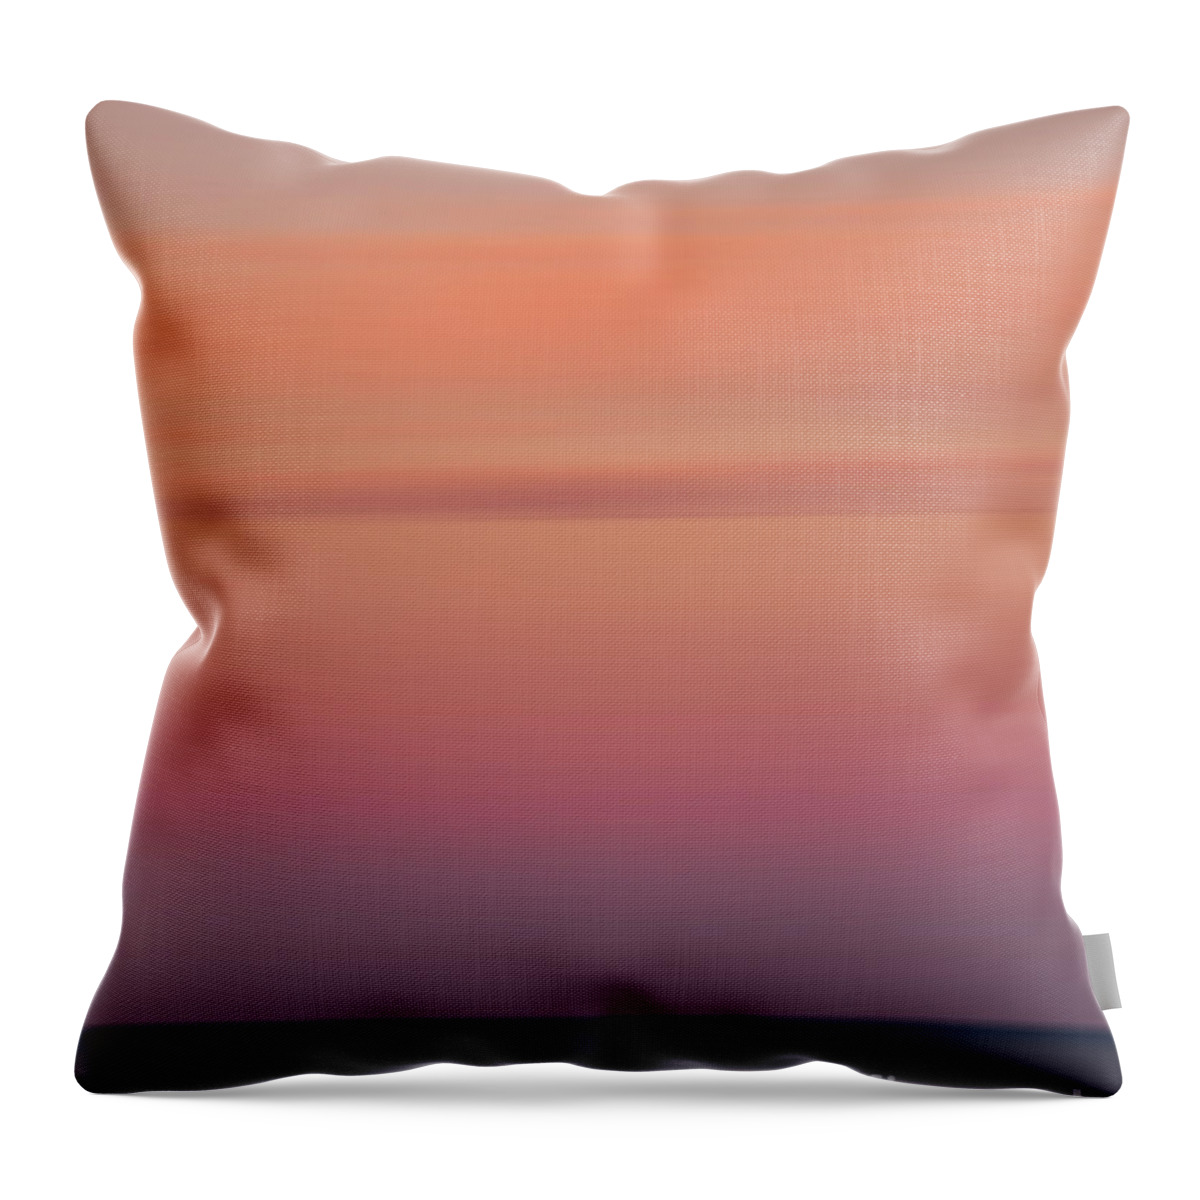 Sunset Throw Pillow featuring the photograph Nice Sunset by Bill Frische